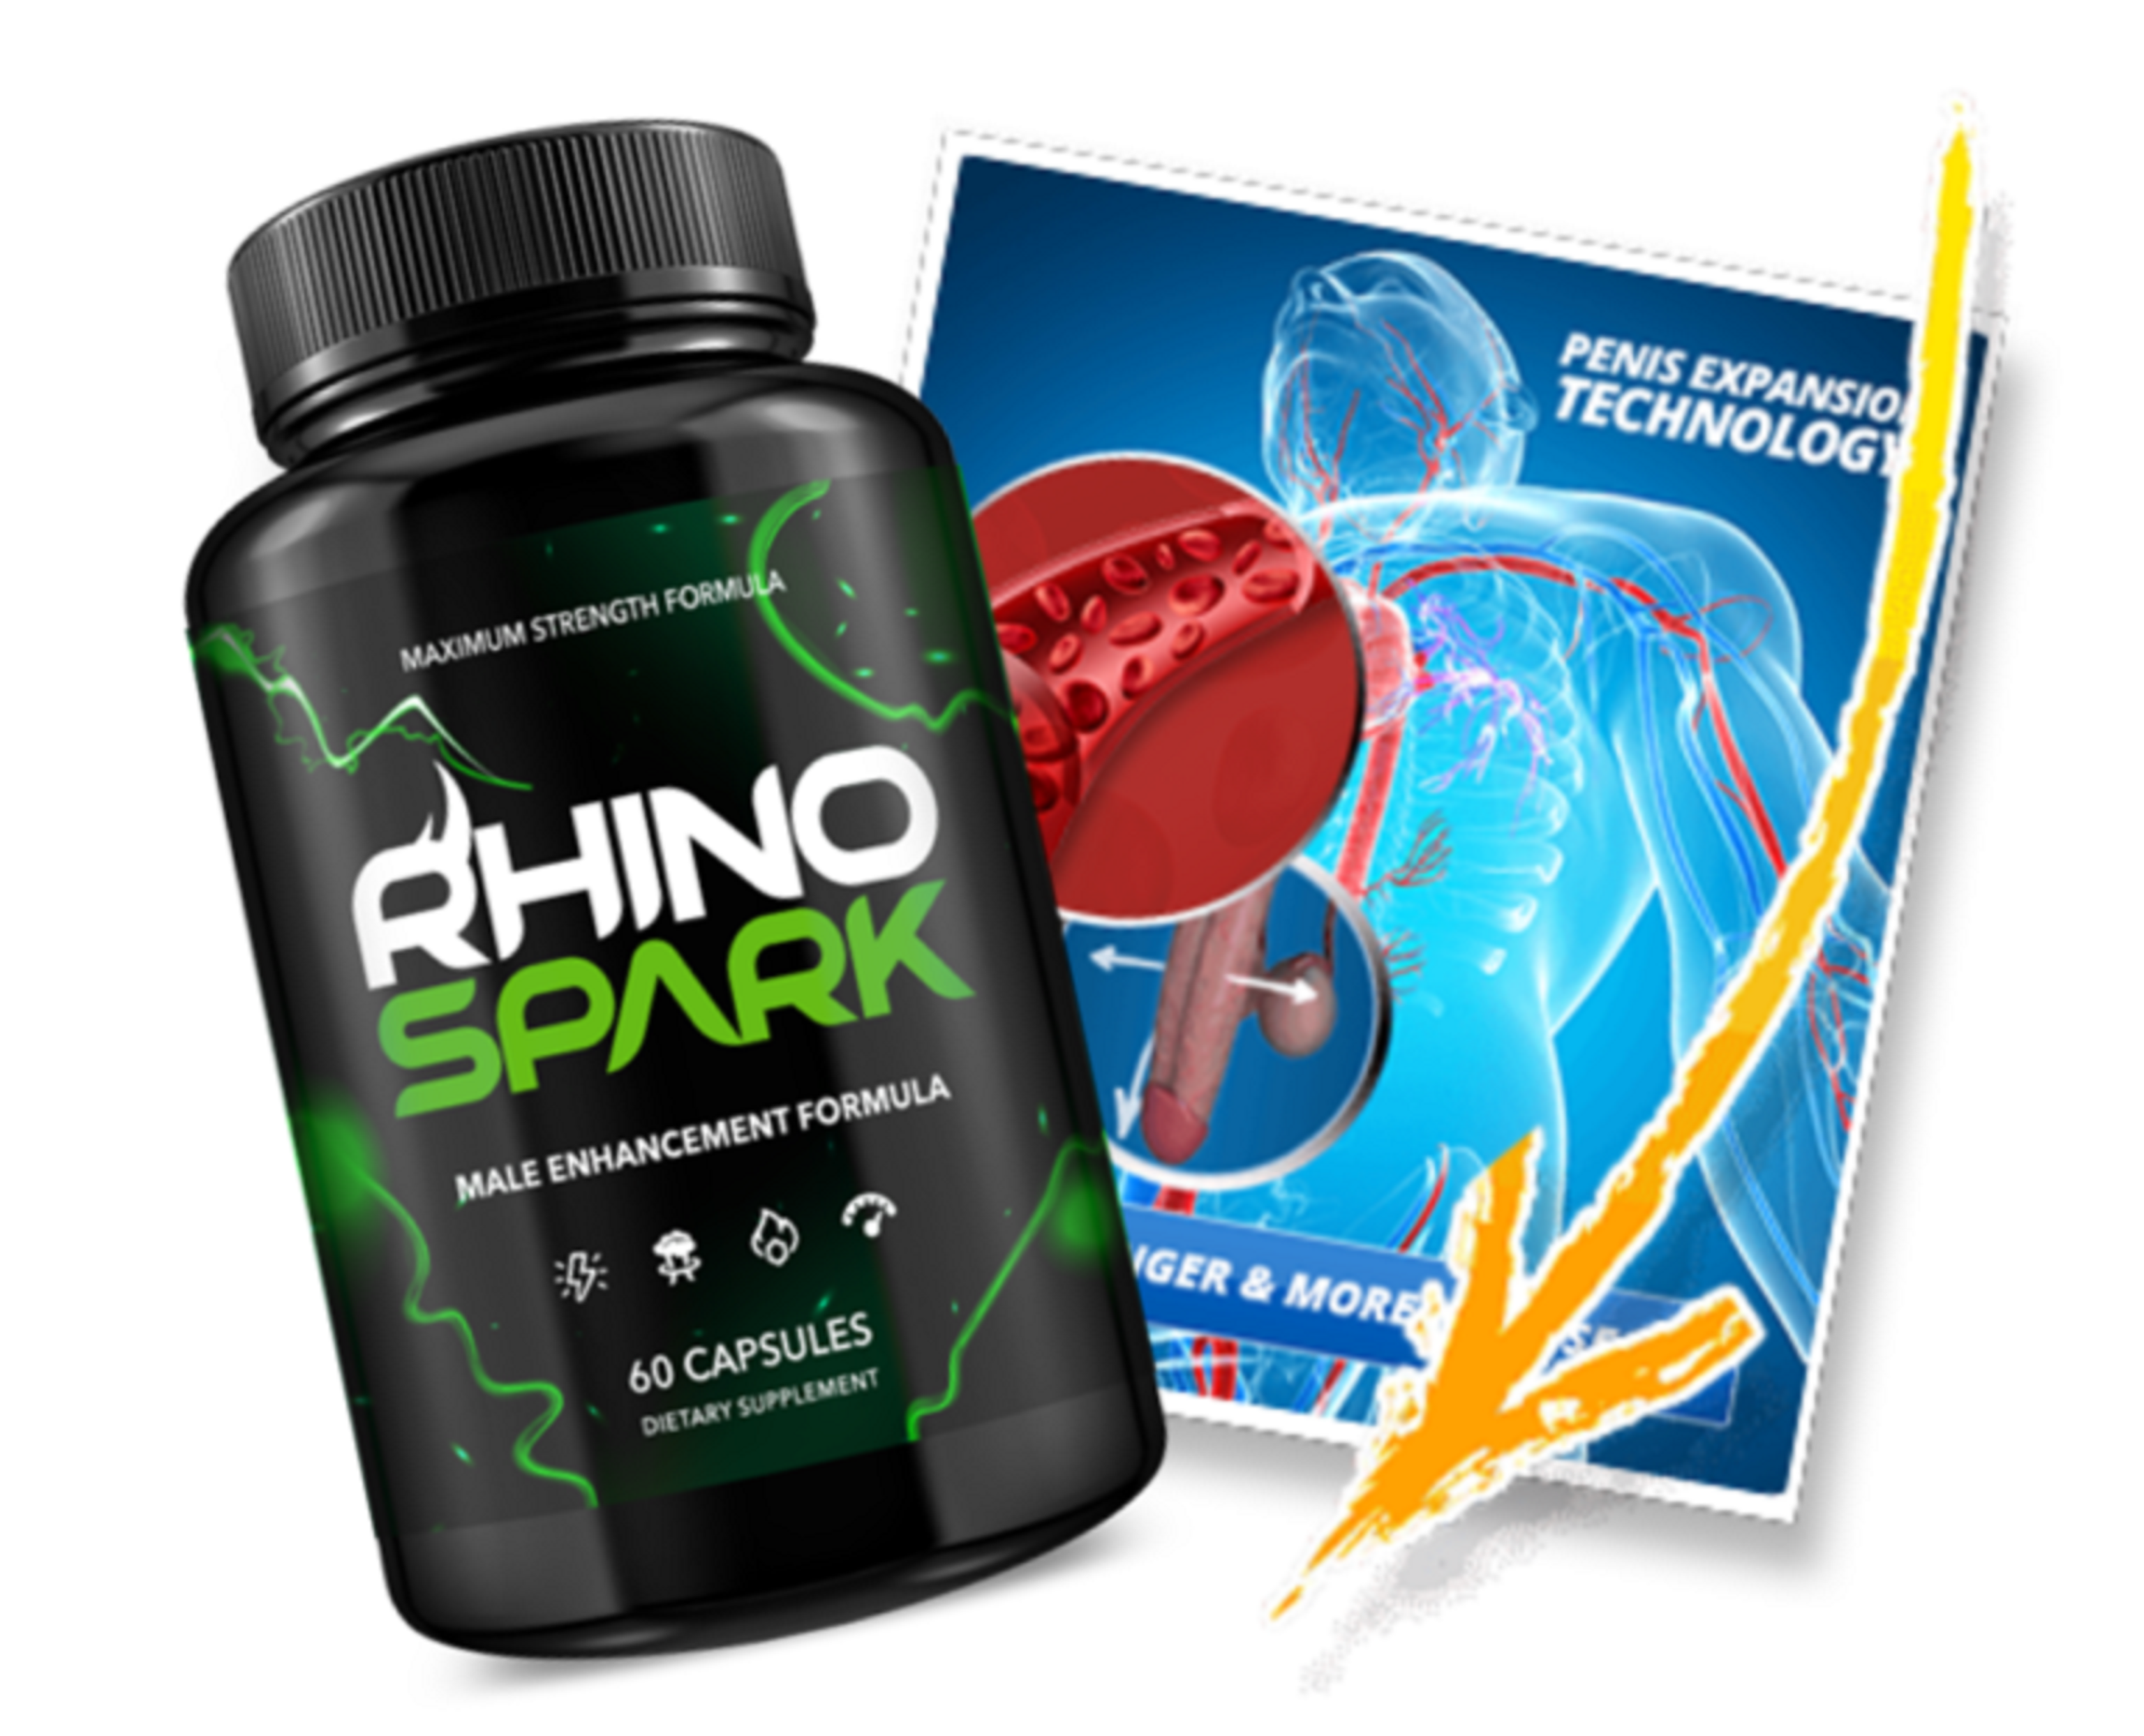 Rhino-Spark-Male-Enhancement-1-768x622 - Copy.png